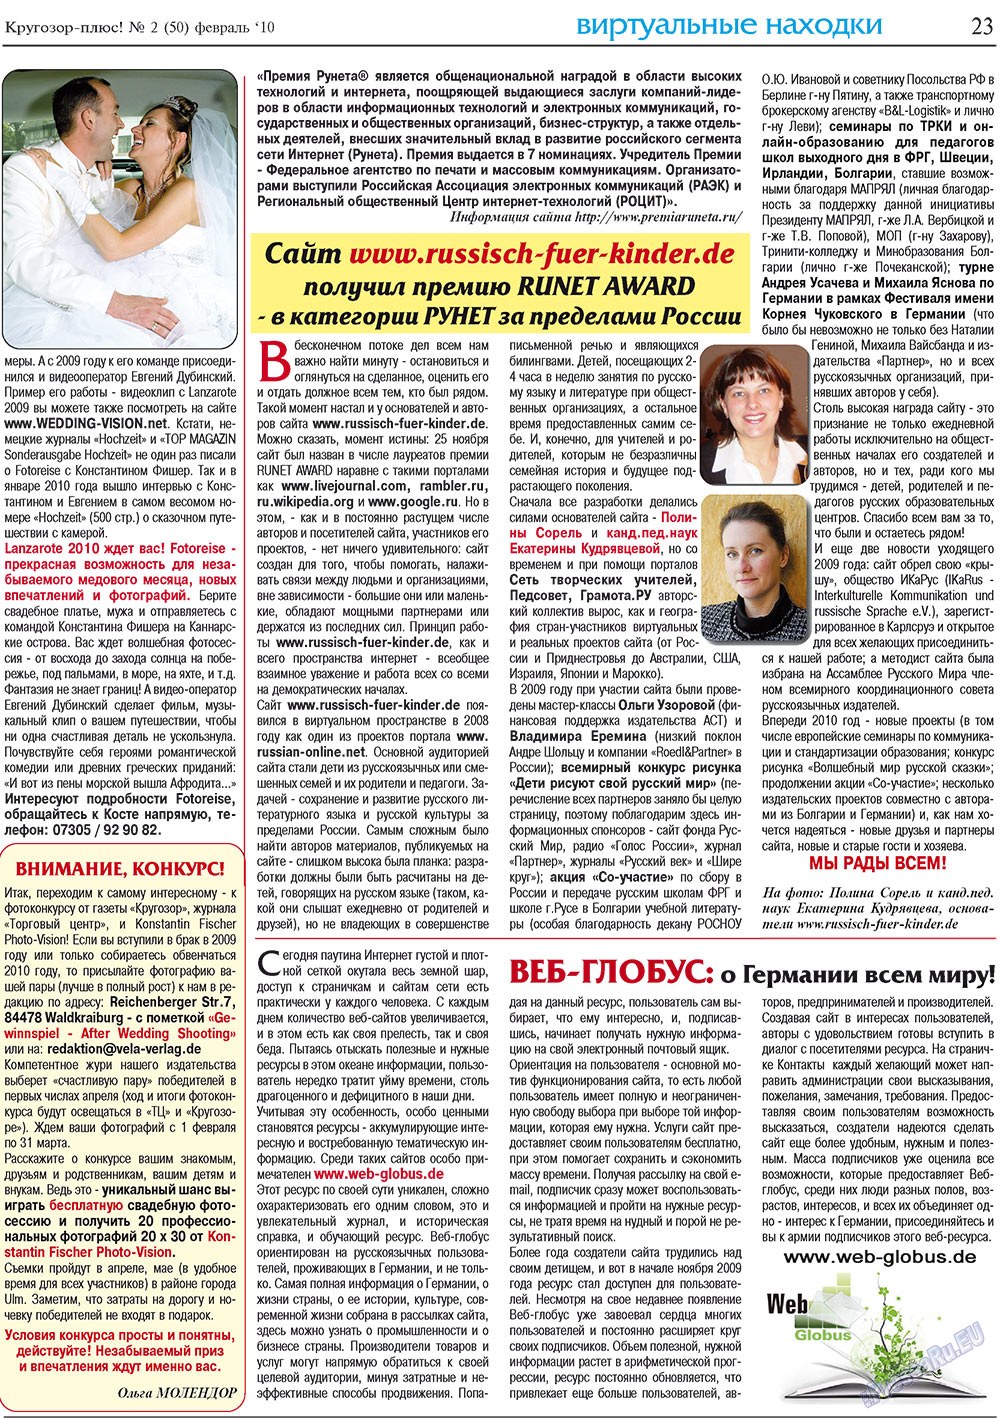 Кругозор плюс! (газета). 2010 год, номер 2, стр. 23